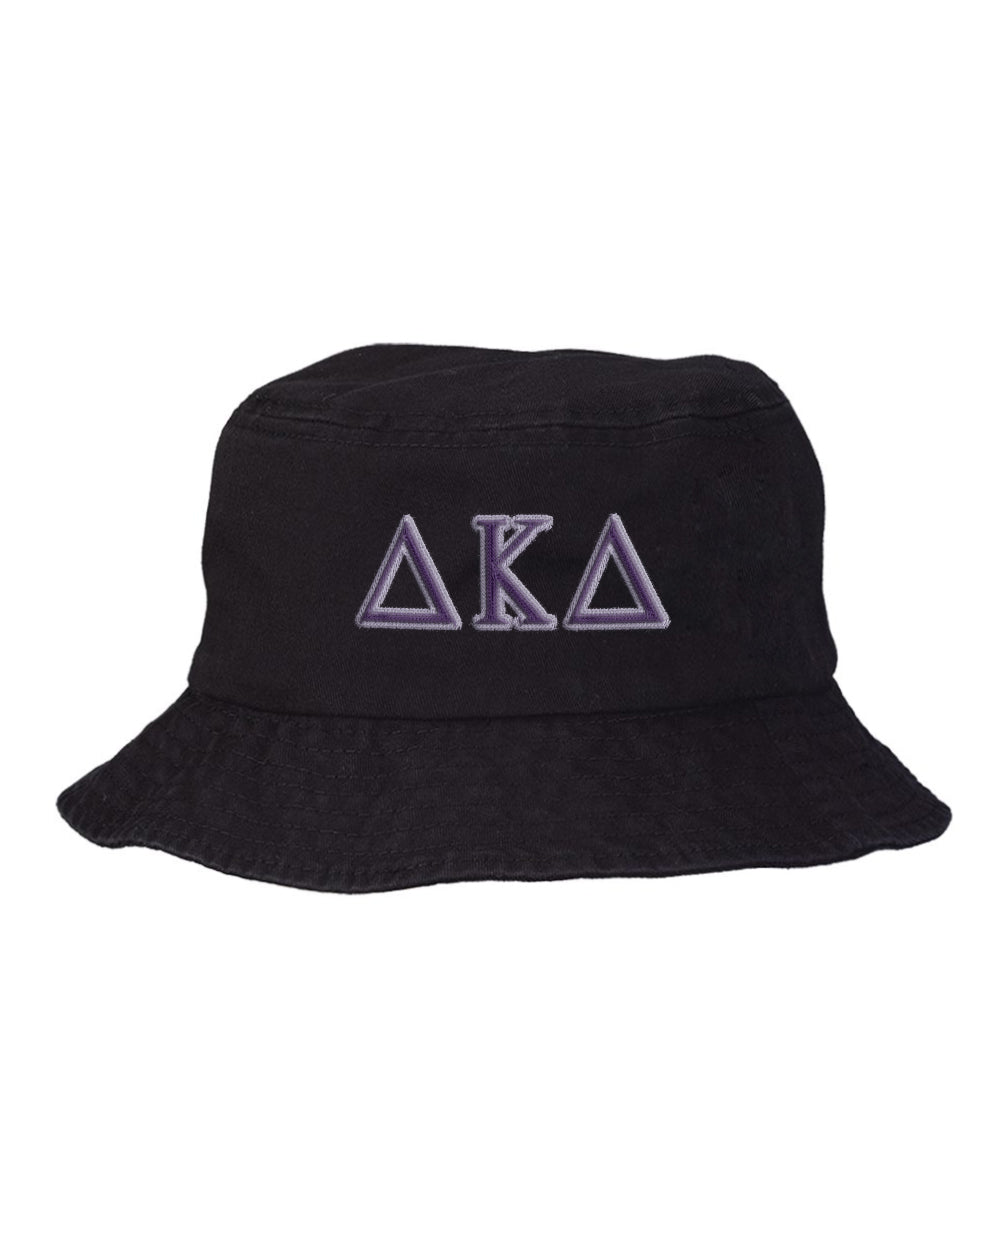 Delta Kappa Delta  Embroidered Bucket Hat